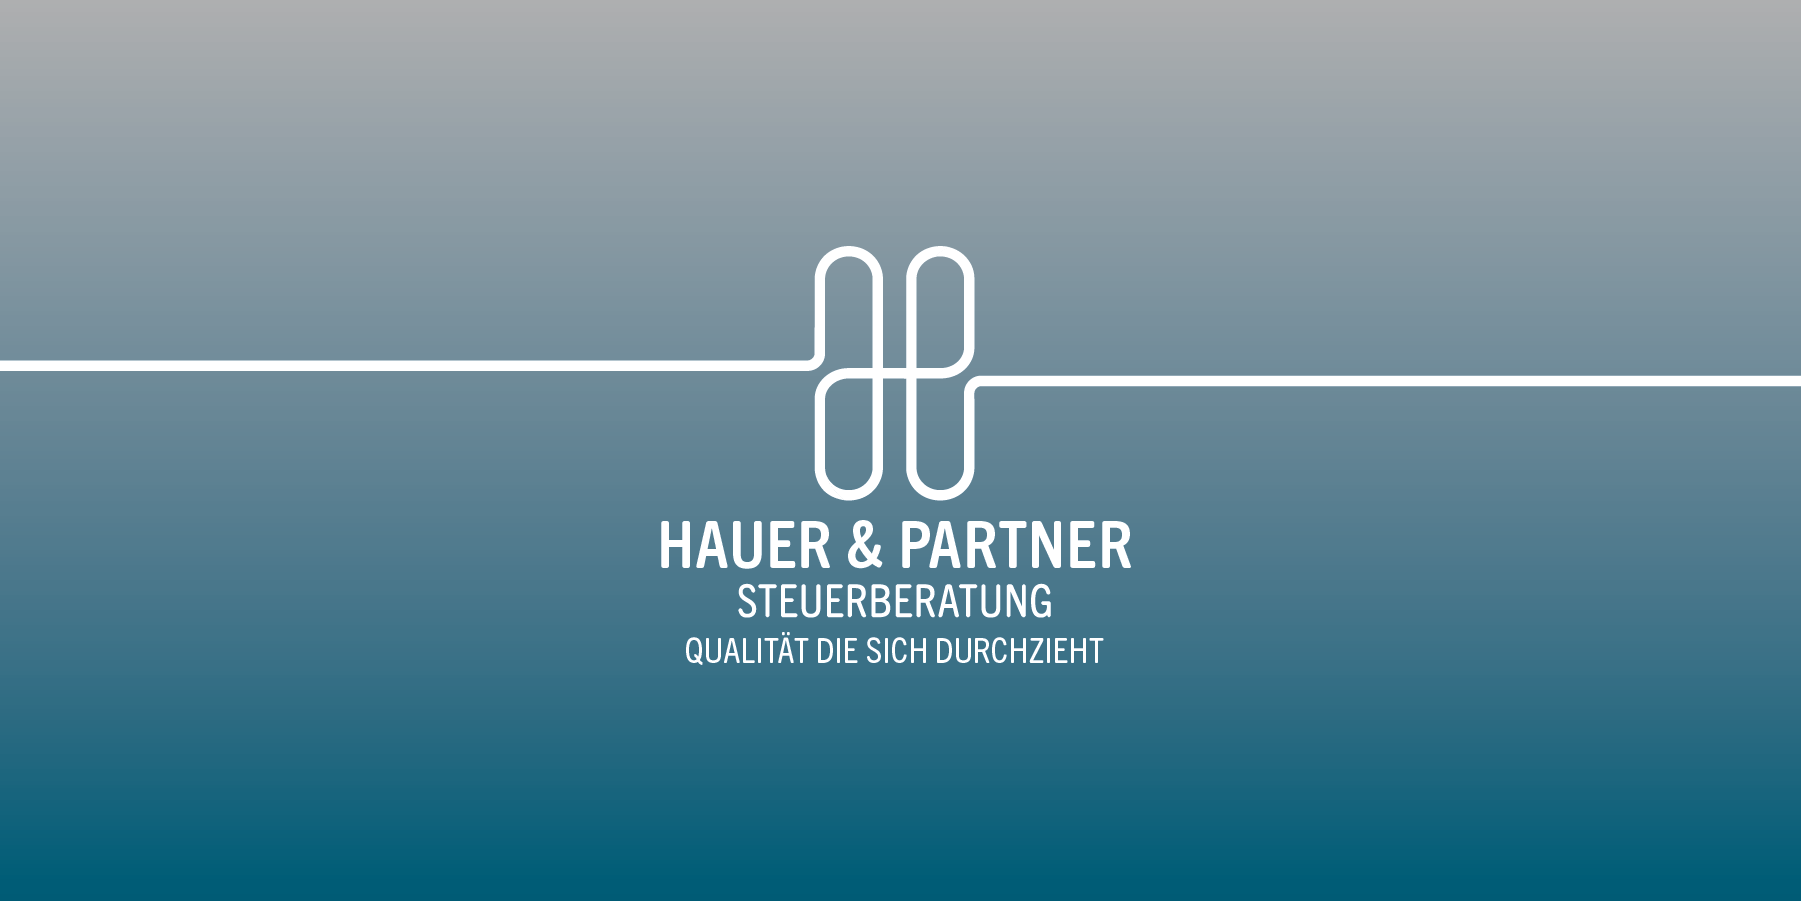 Hauer & Partner Steuerberatung